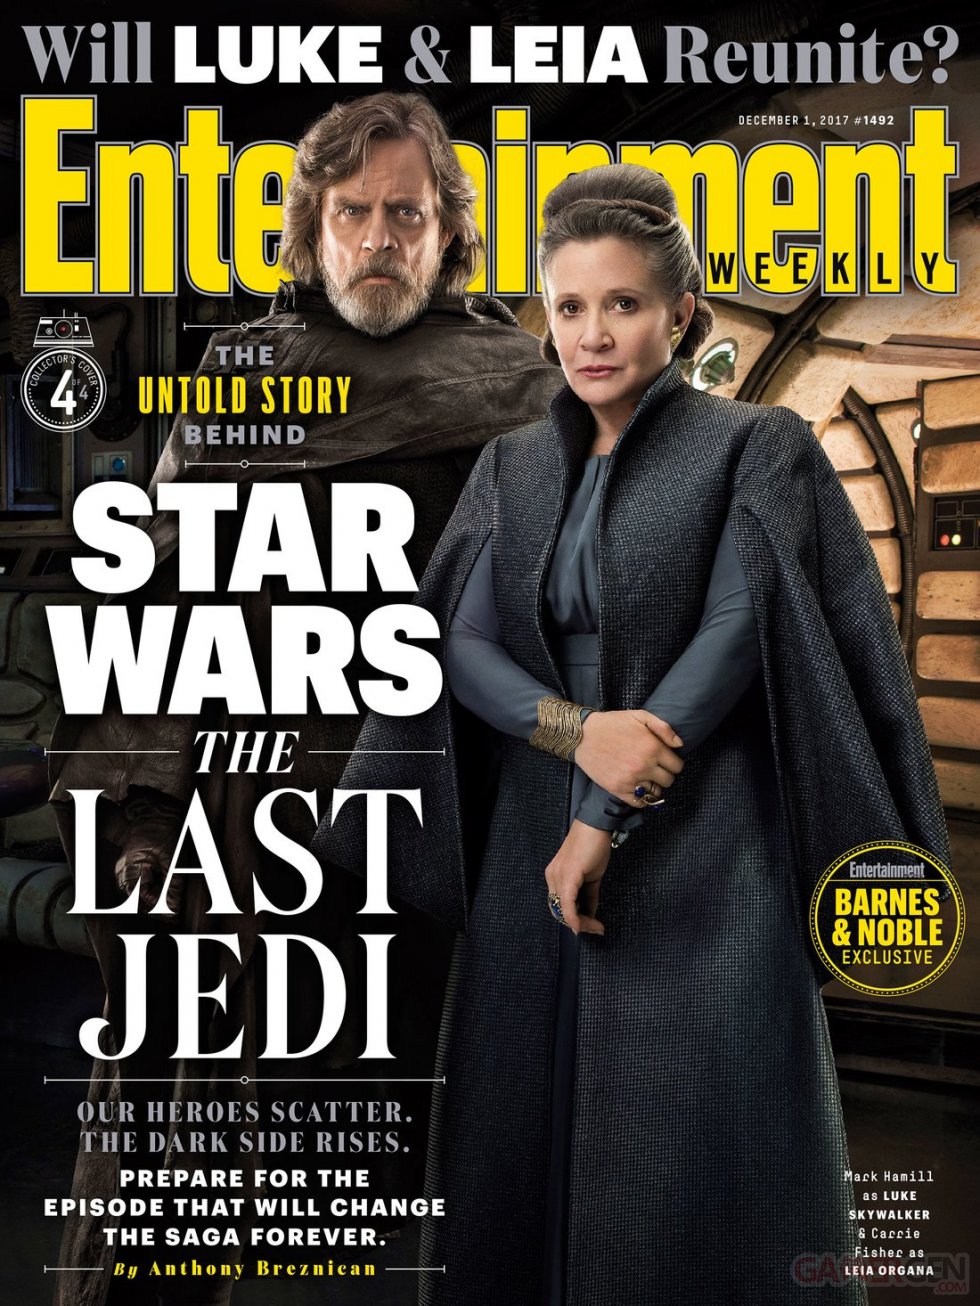 Star Wars  Les Derniers Jedi couvertures covers Entertainment Weekly images (4)